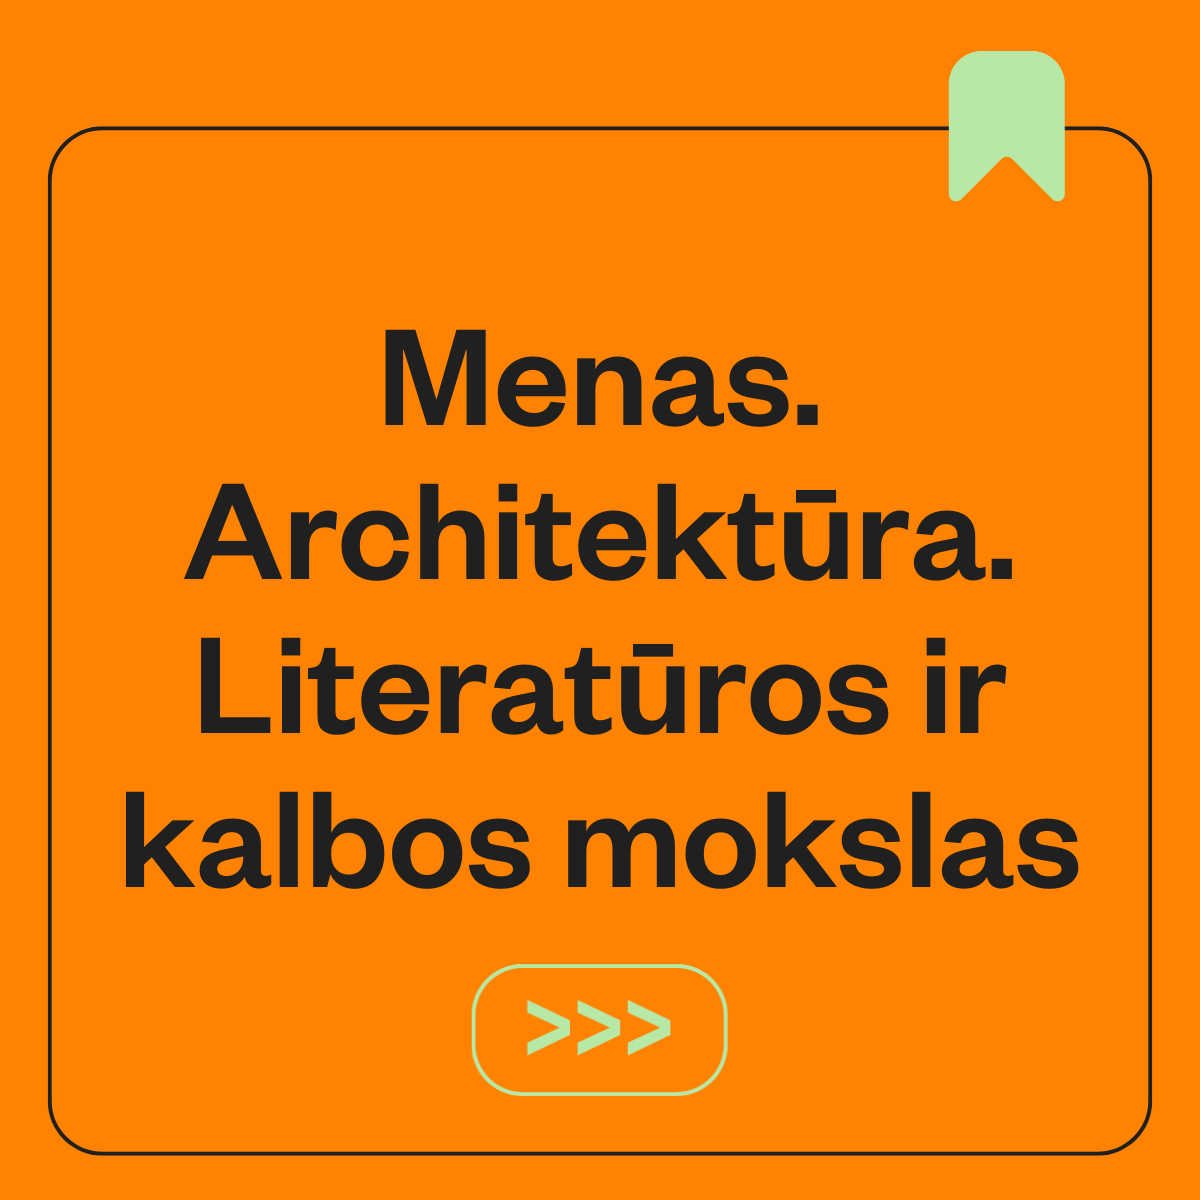 Menas. Architektūra. Literatūros ir kalbos mokslas